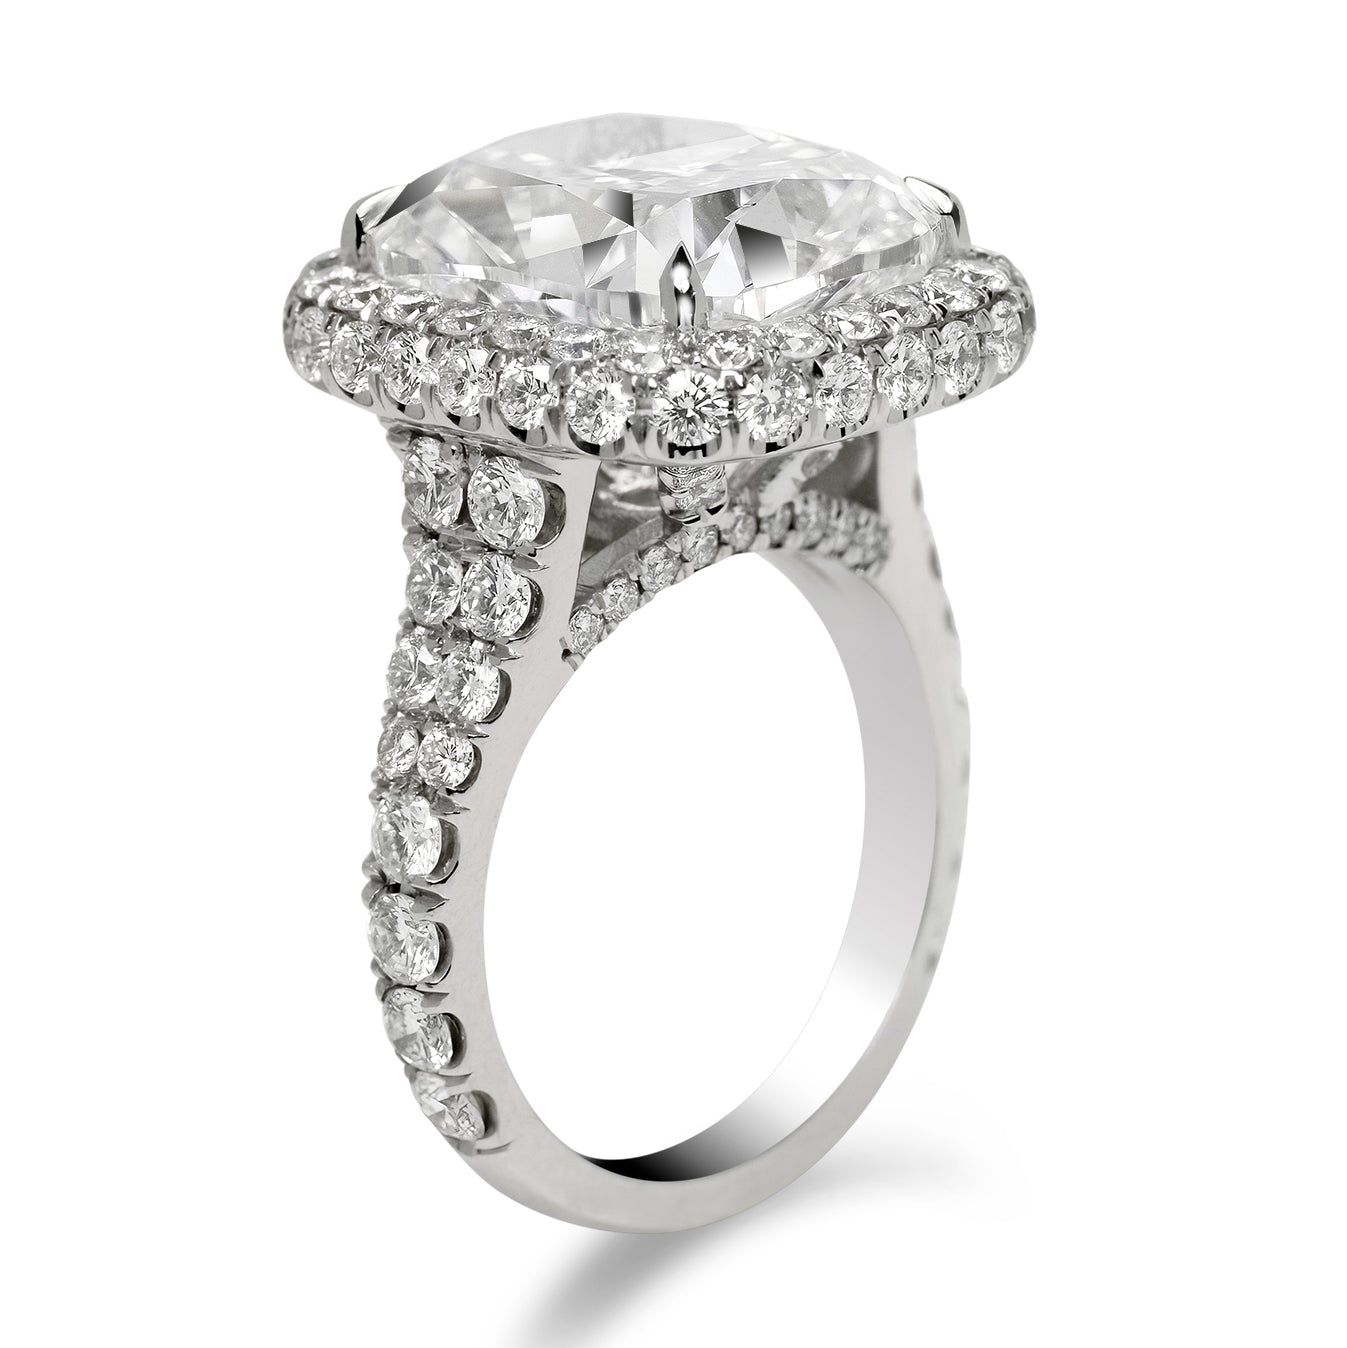 Diamond Ring Cushion Cut 14 Carat Halo Ring in Platinum Side View